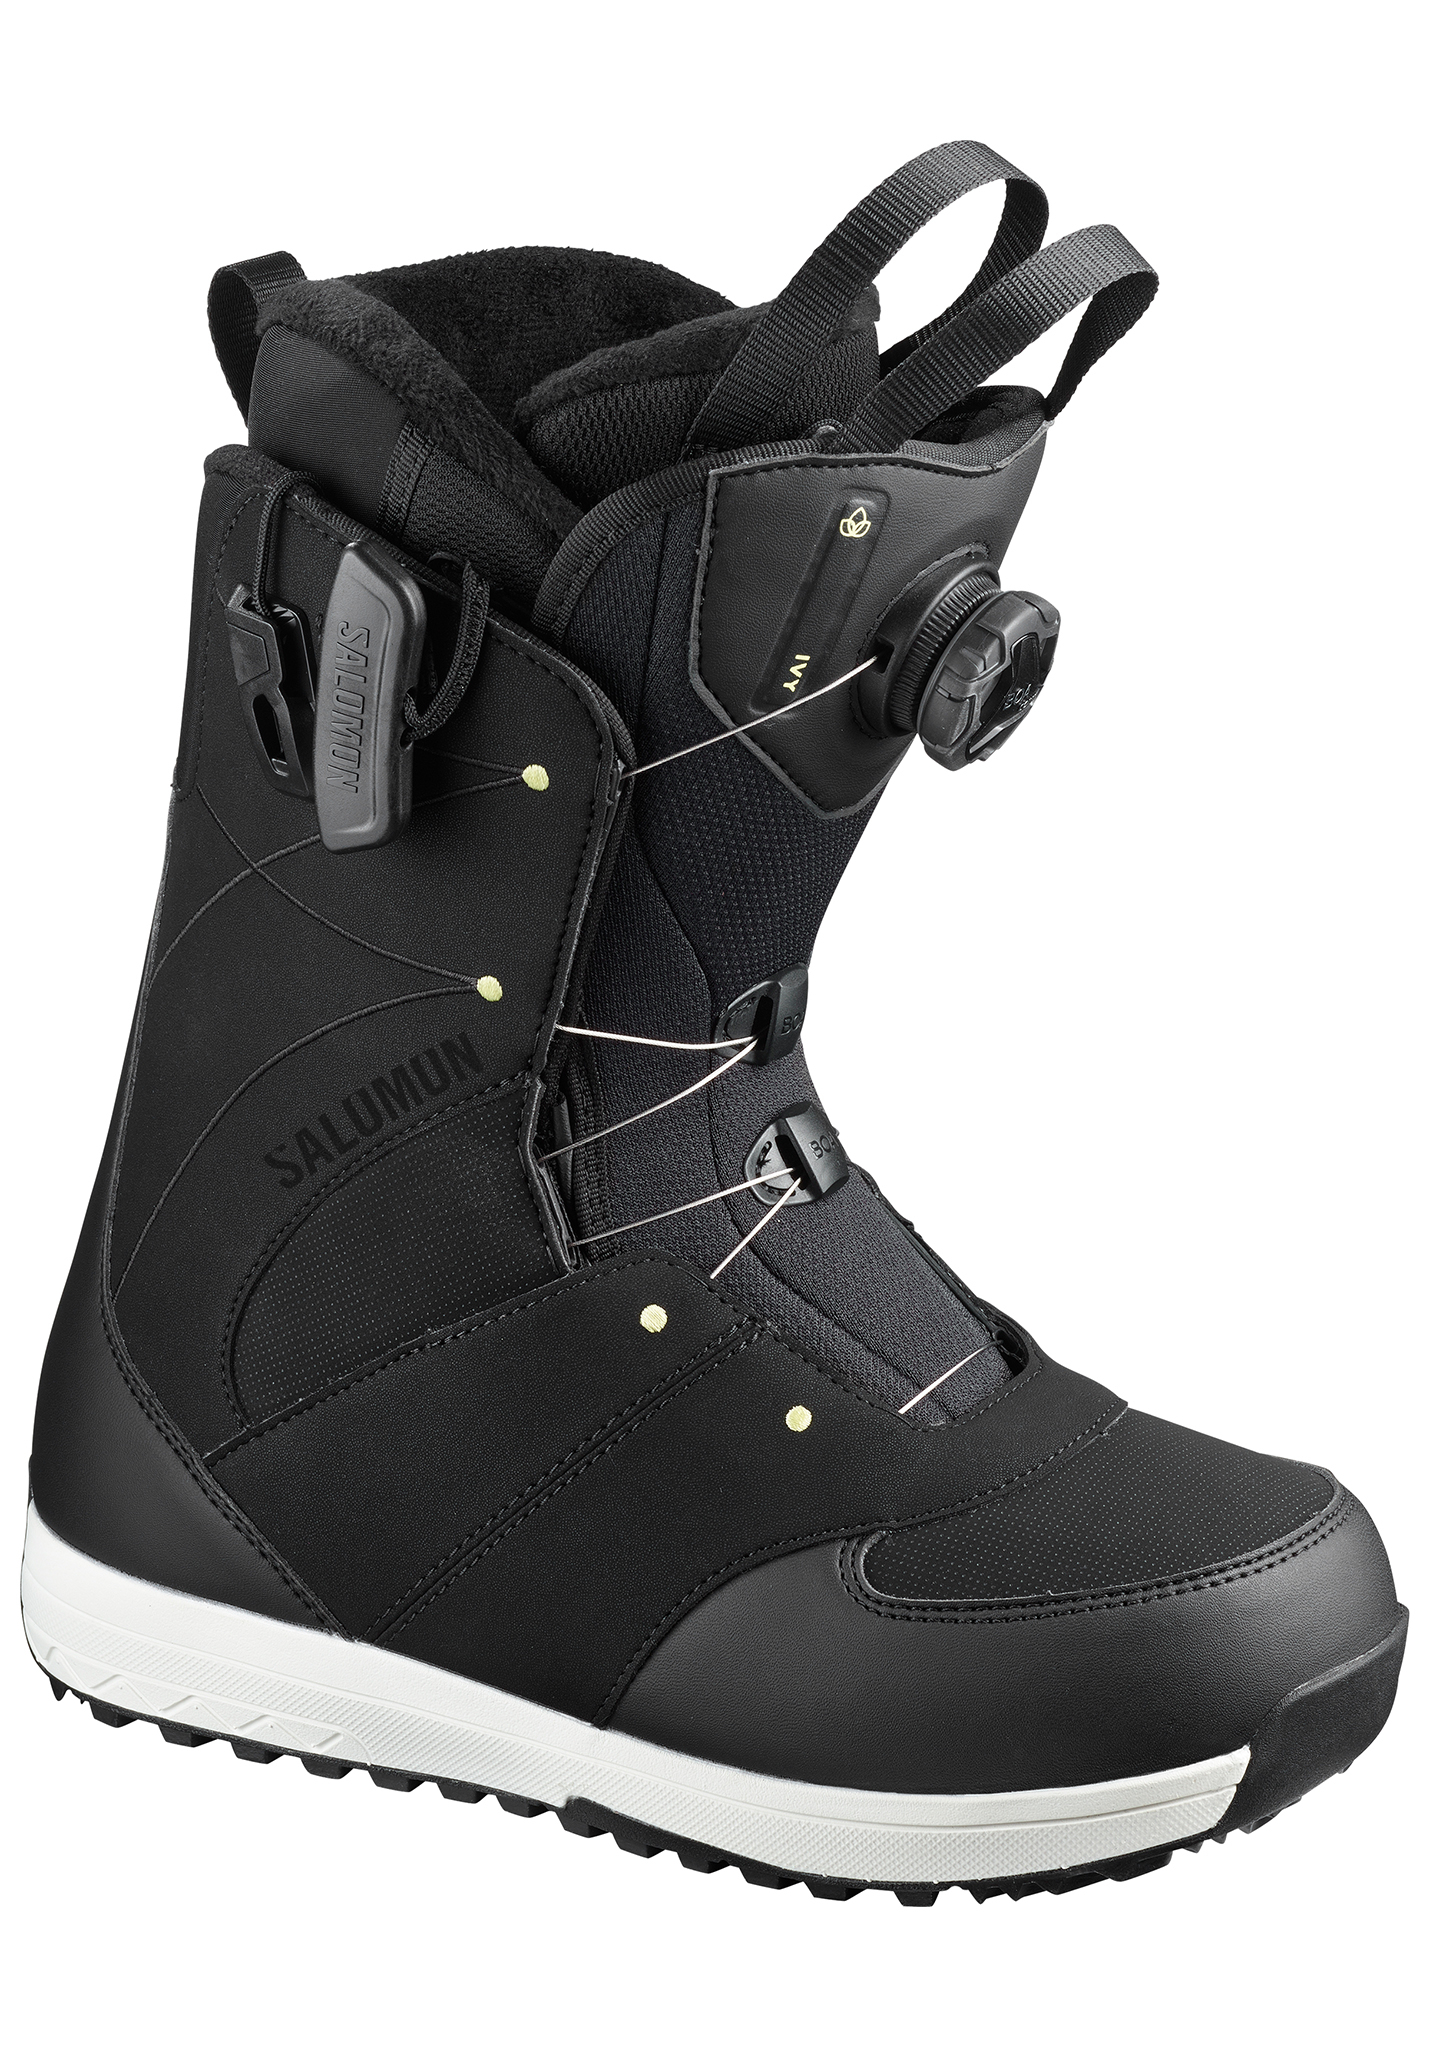 Salomon Ivy Boa All Mountain Snowboard Boots schwarz/schwarz/helles kalkgelb 42